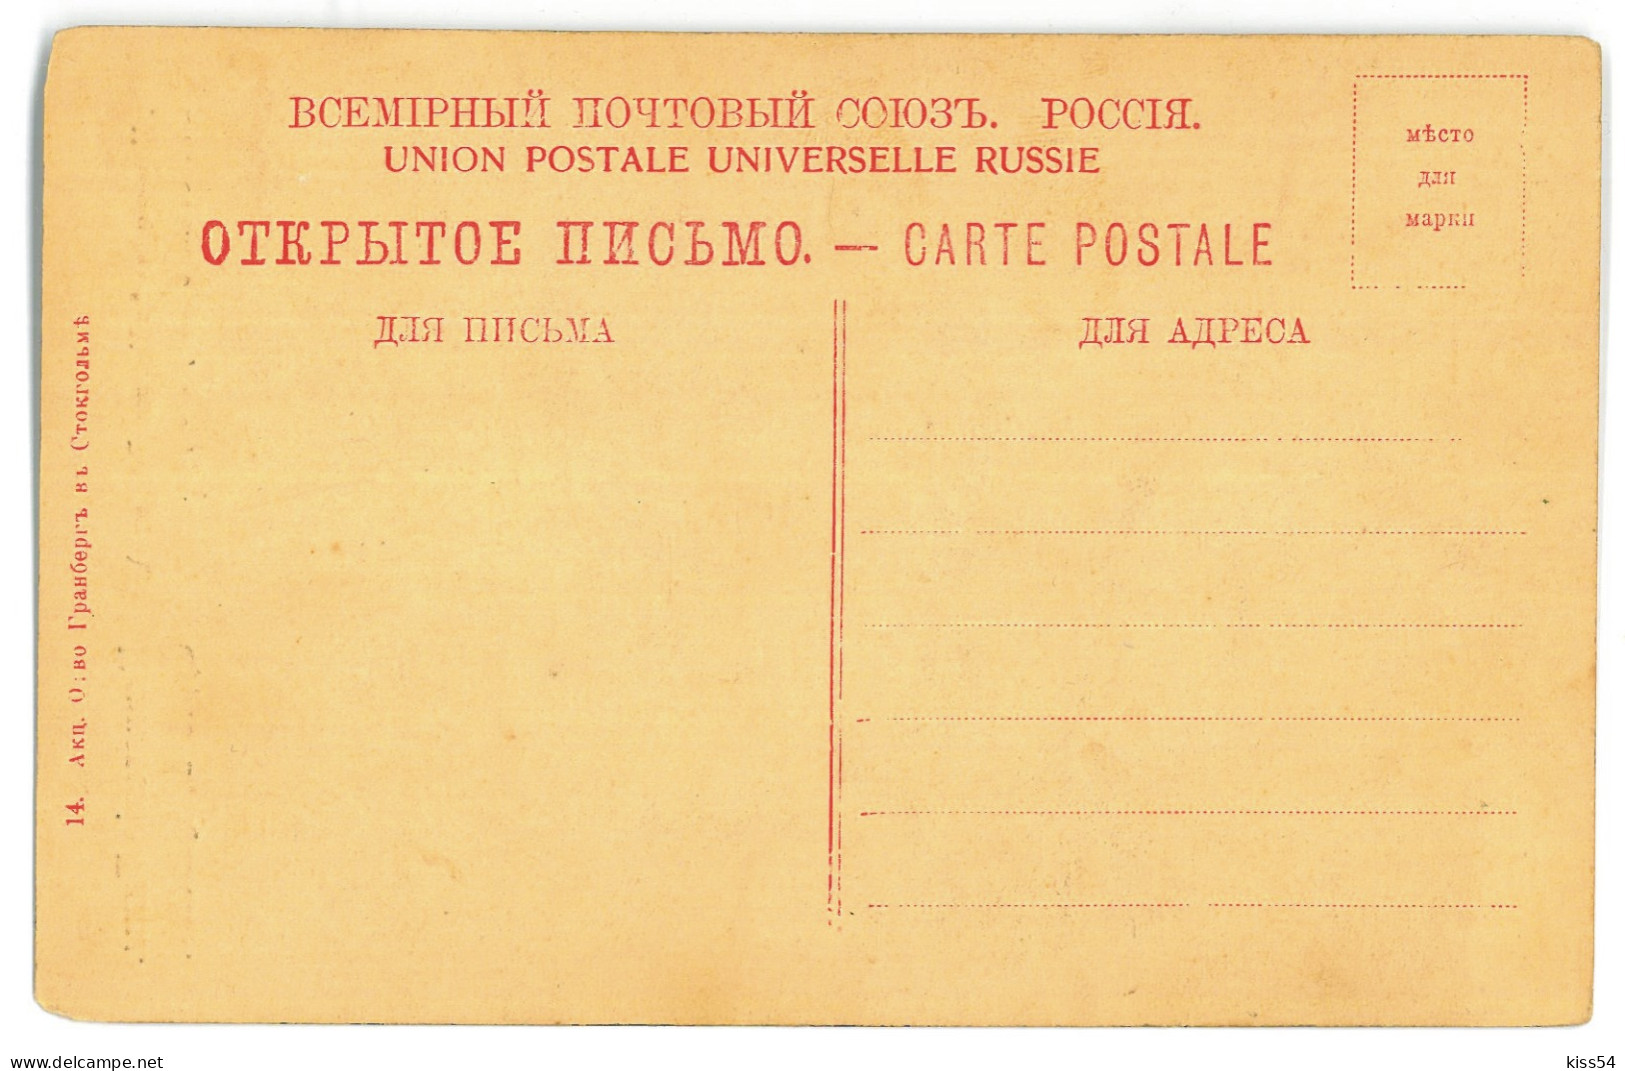 RUS 87 - 23267 ETHNICS On Horseback From The CAUCASUS, Russia - Old Postcard - Unused - Russia